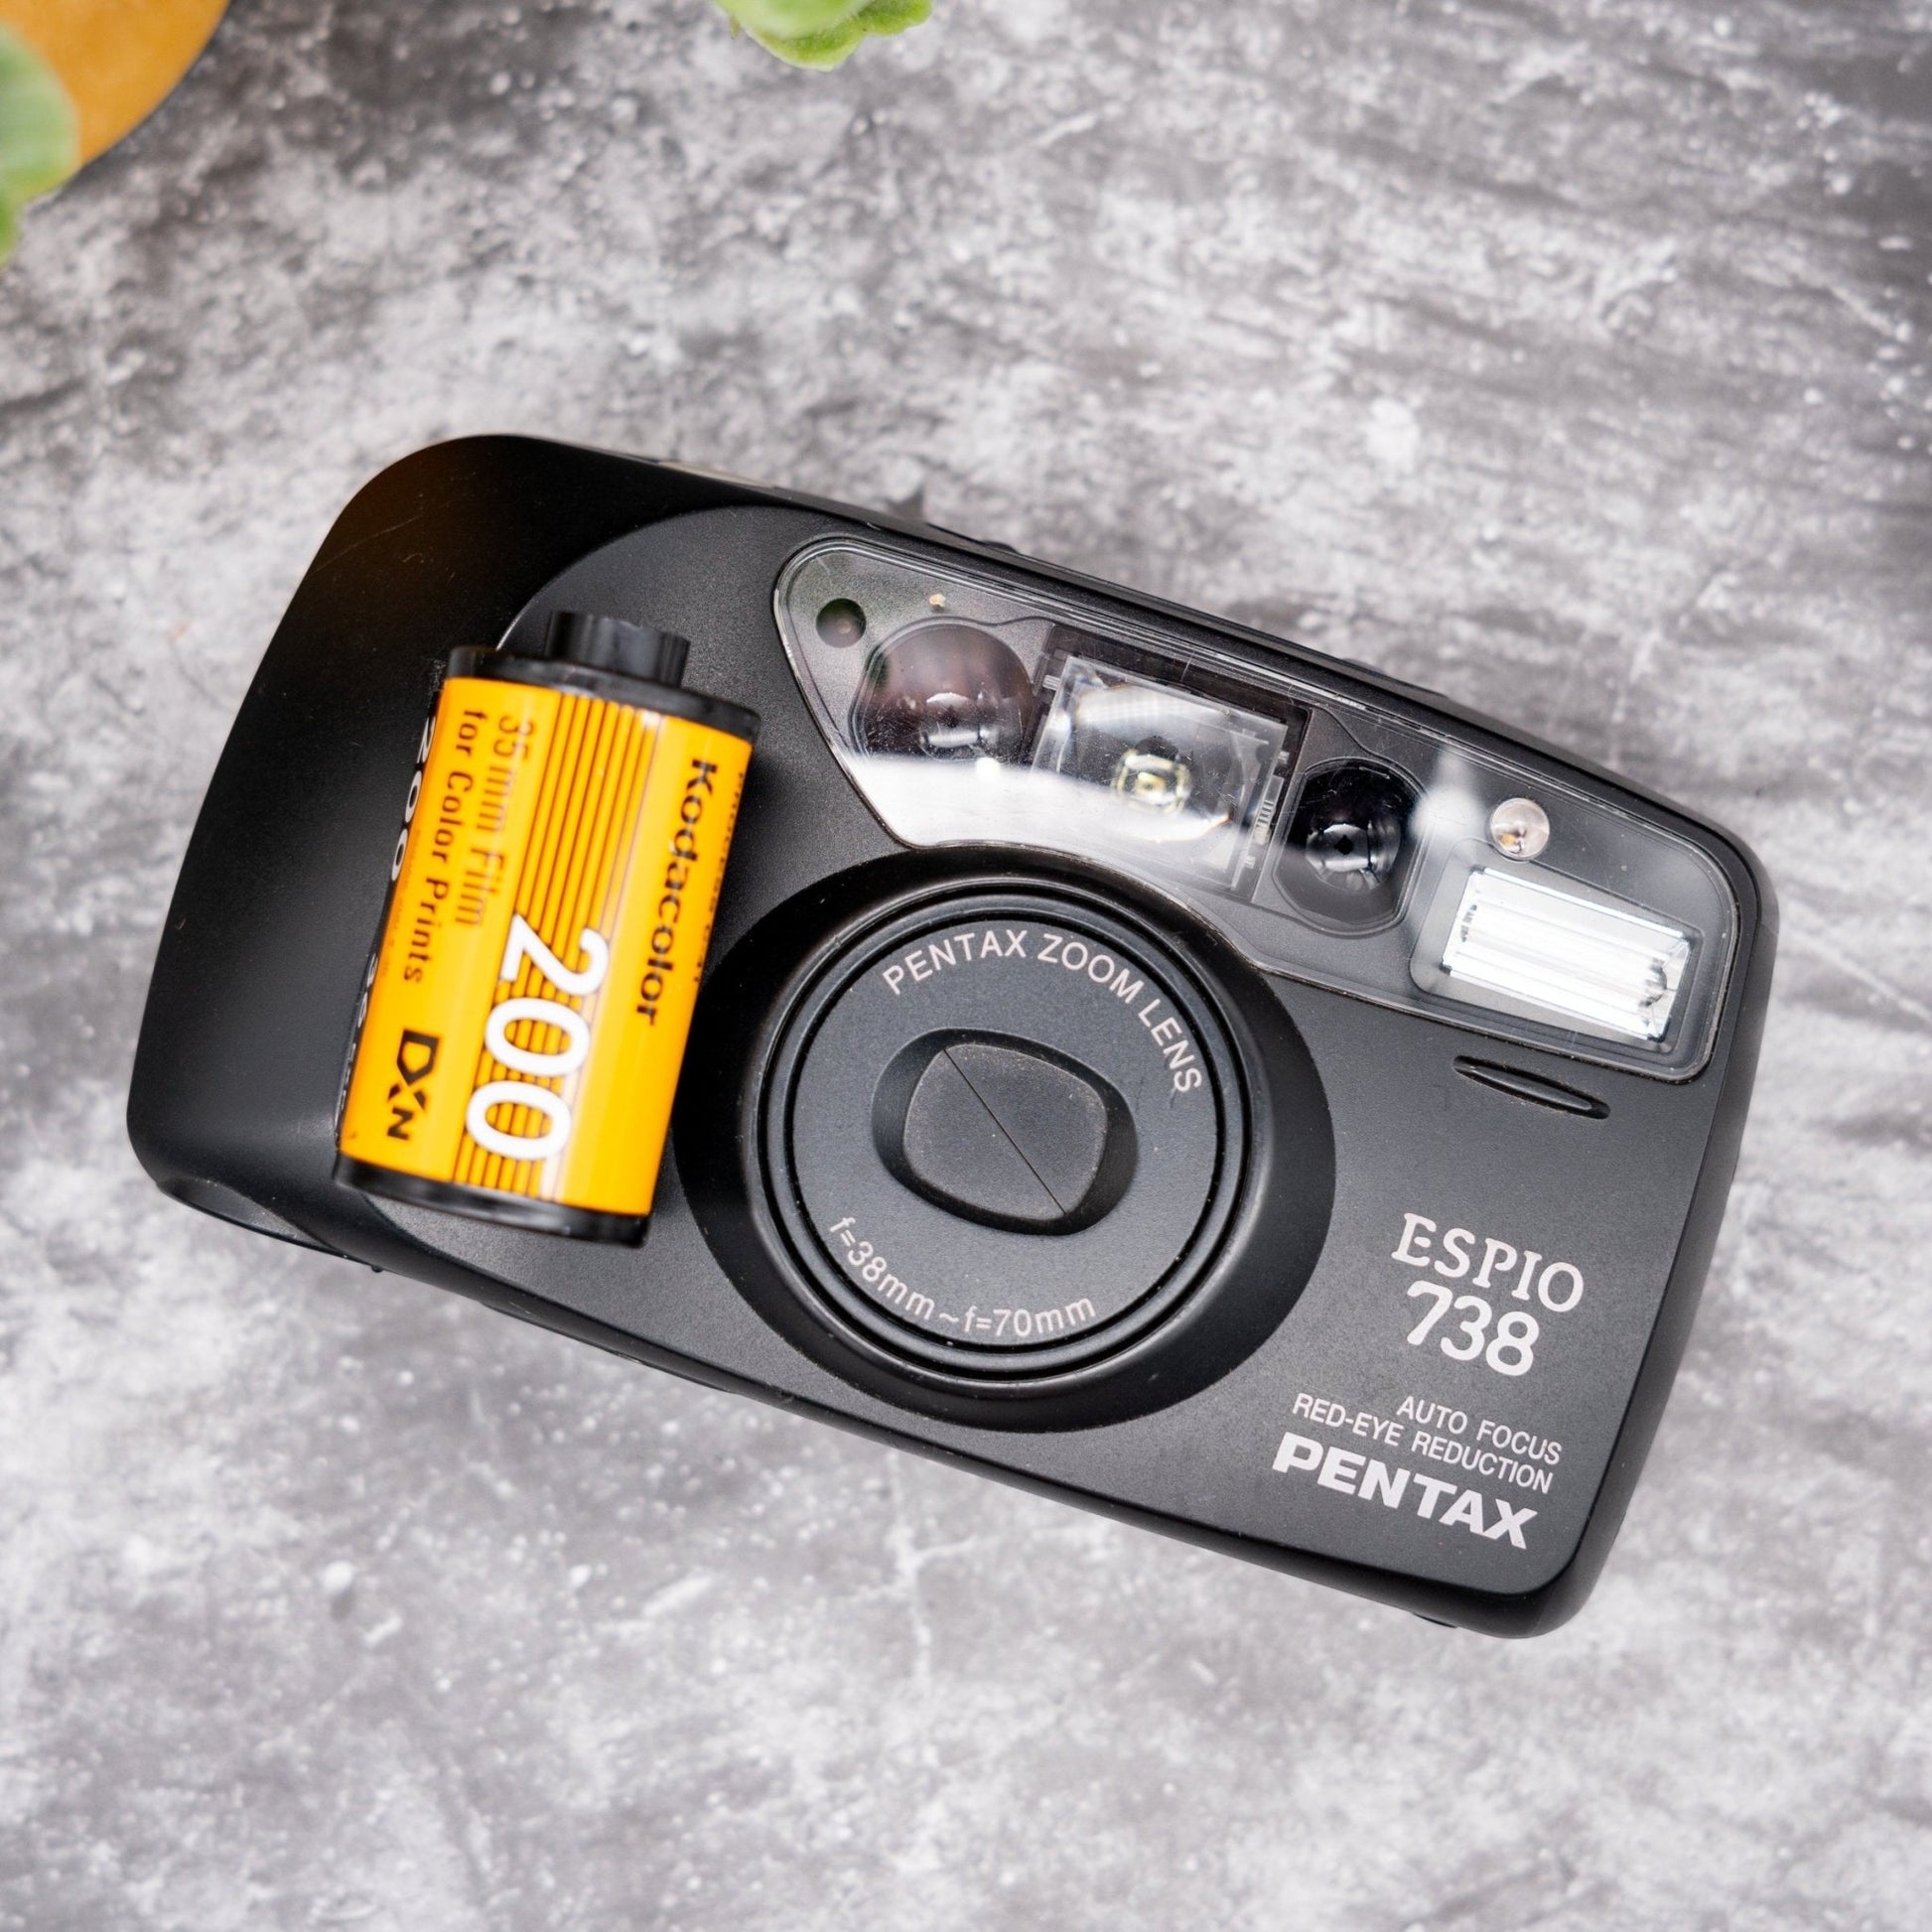 35mm Point & Shoot Film Camera Kit | Pentax Espio 738 + Roll Of Expired Film - Expired Film Club